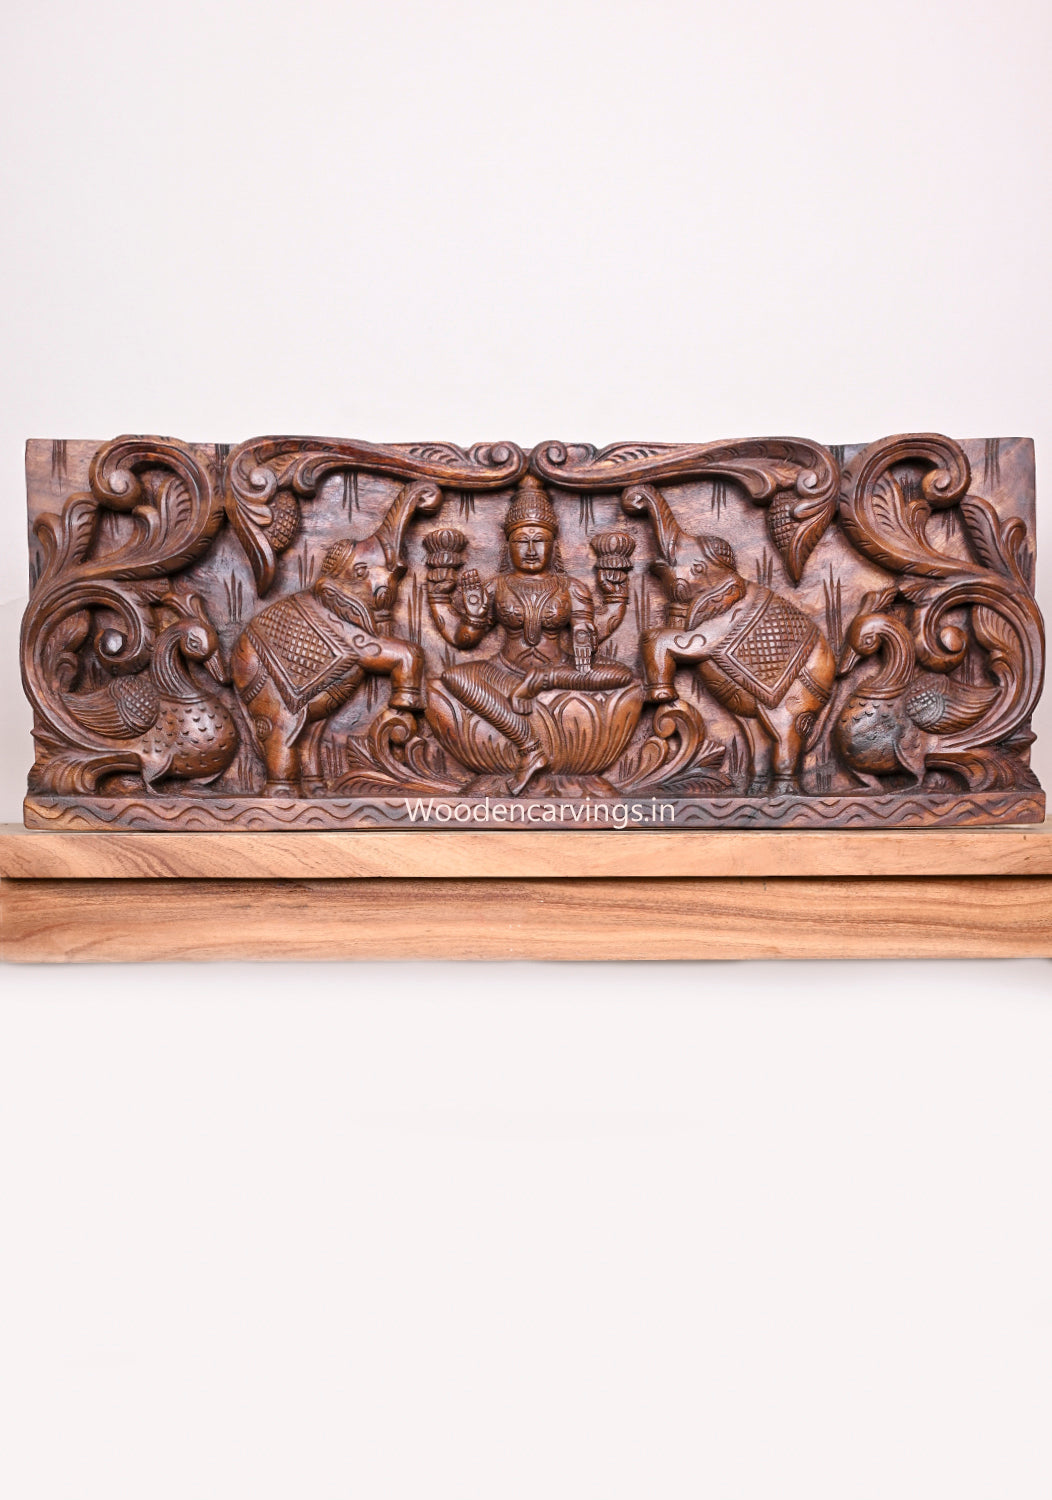 Stunning Peacock Designed Goddess Gajalakshmi With Paired Elephants Entrance Decor Wooden Wax Brown Panel 30.5"